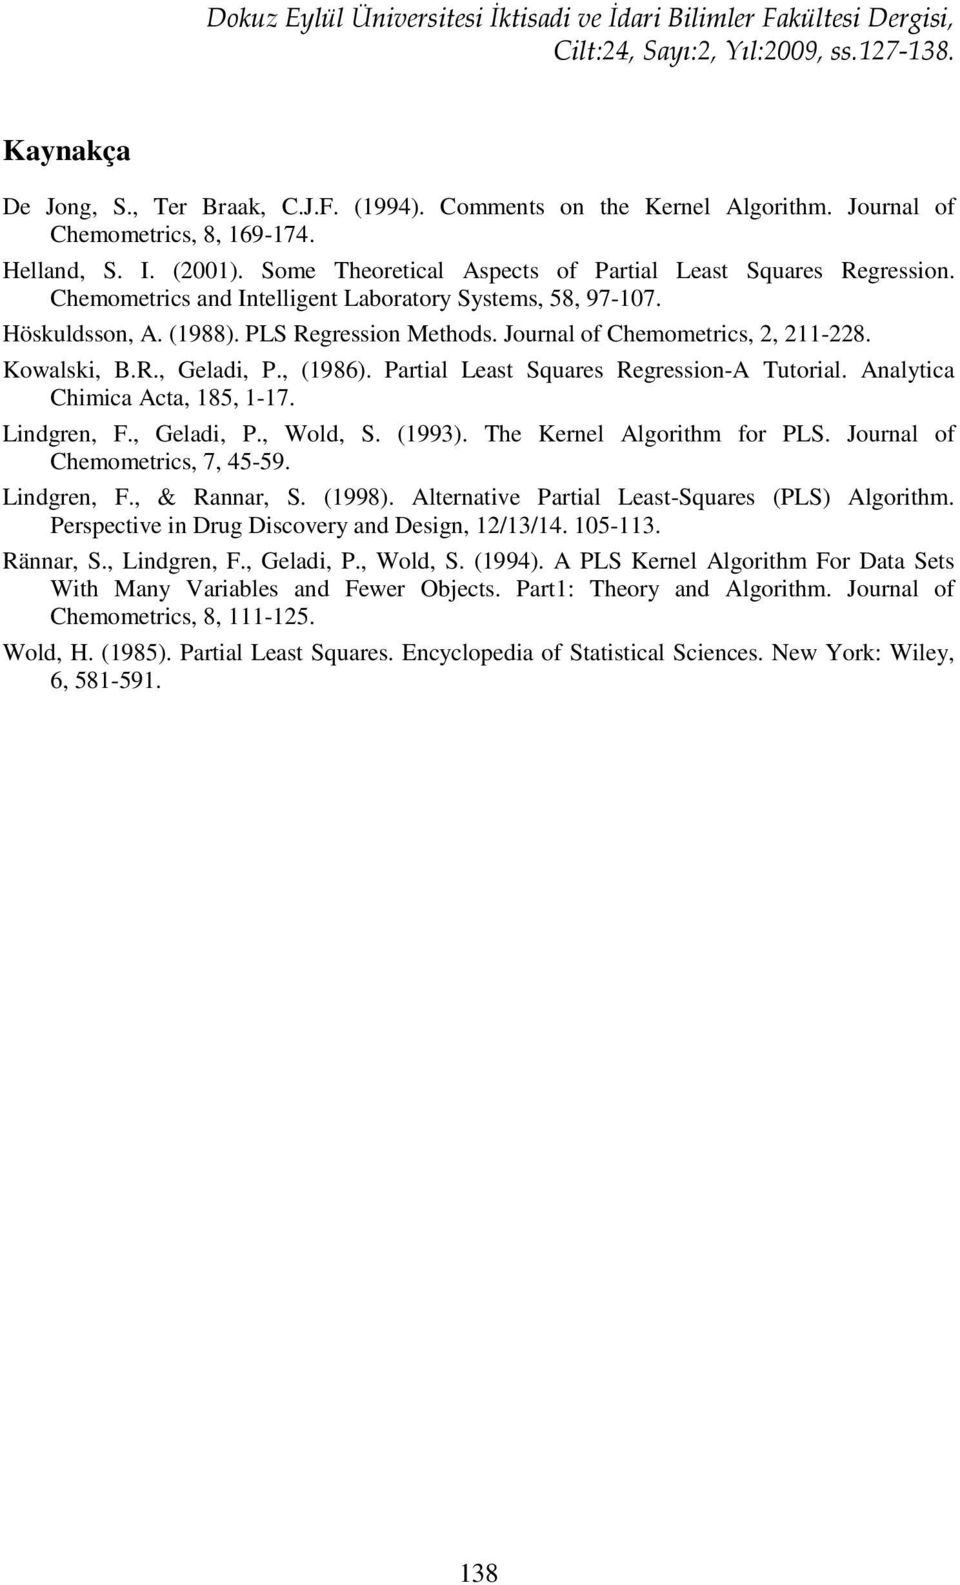 Kowlski, B.R., Geldi, P., (986). Pril Les Sqres Regression-A Toril. Anlyi Chimi A, 85, -7. Lindgren, F., Geldi, P., Wold, S. (99). The Kernel Algorihm for PLS. Jornl of Chemomeris, 7, 45-59.